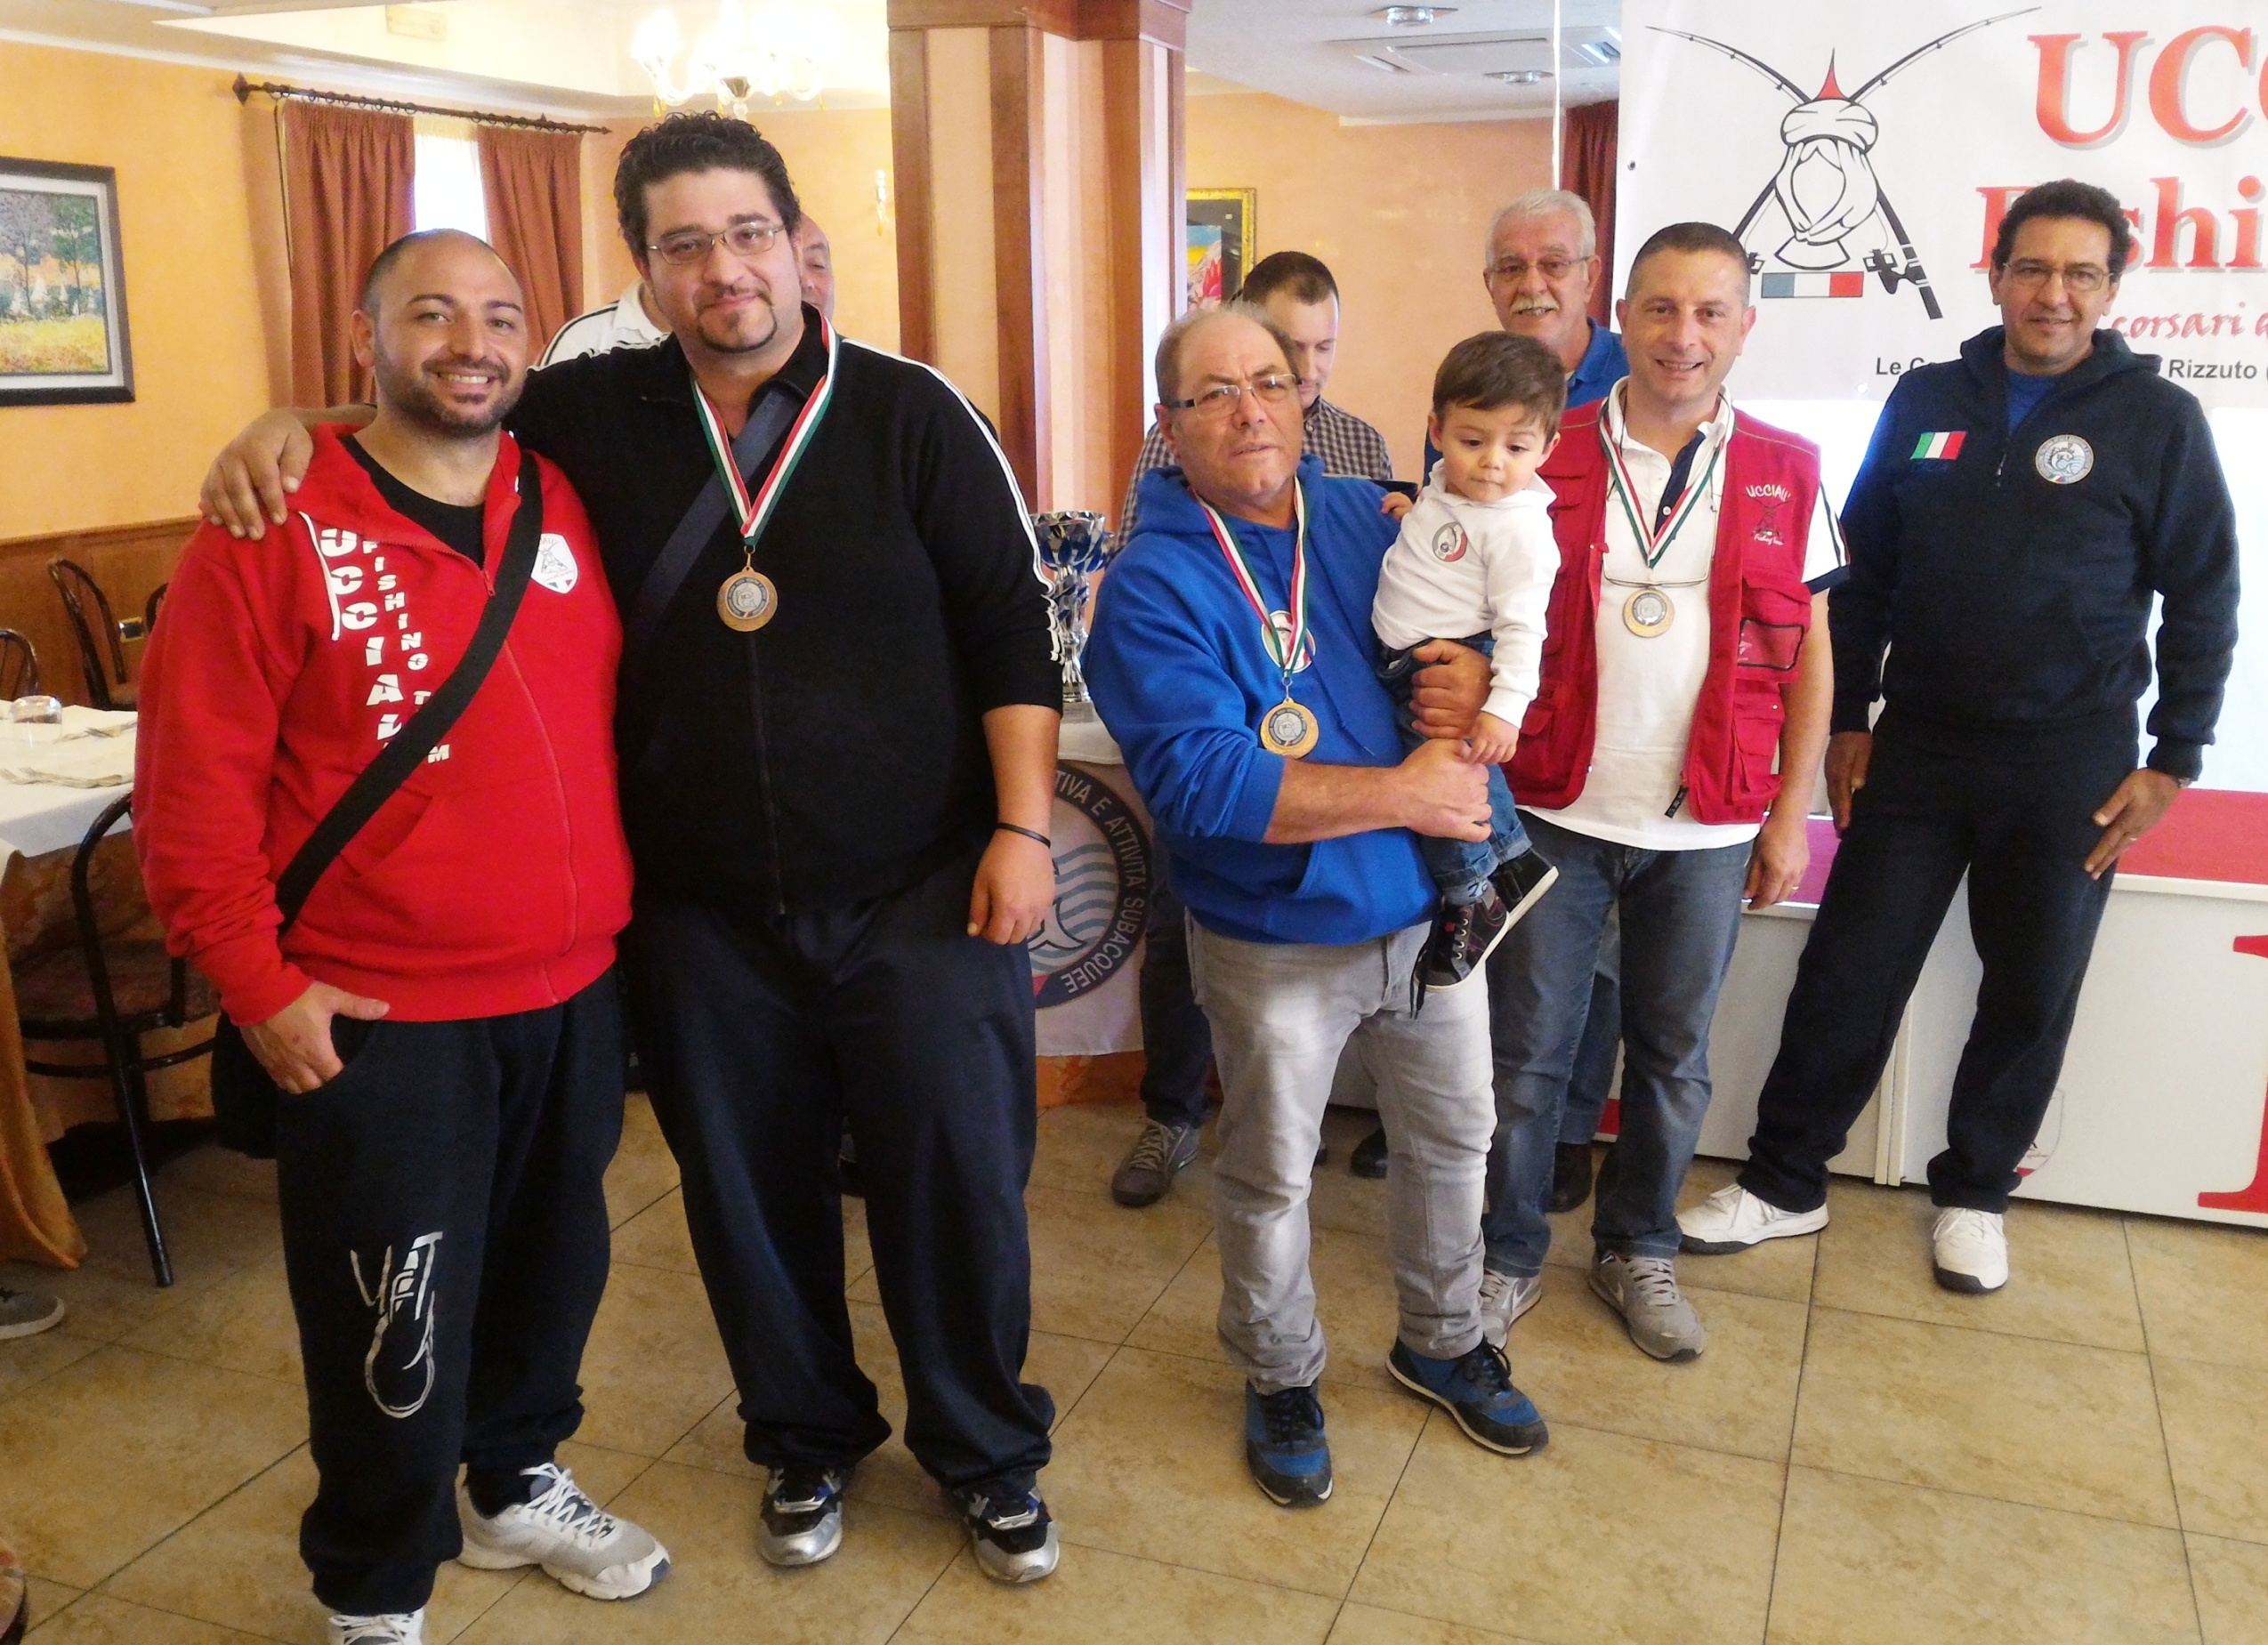 Campionato FIPSAS SURFCASTING Crotone Uccialì Fishing team